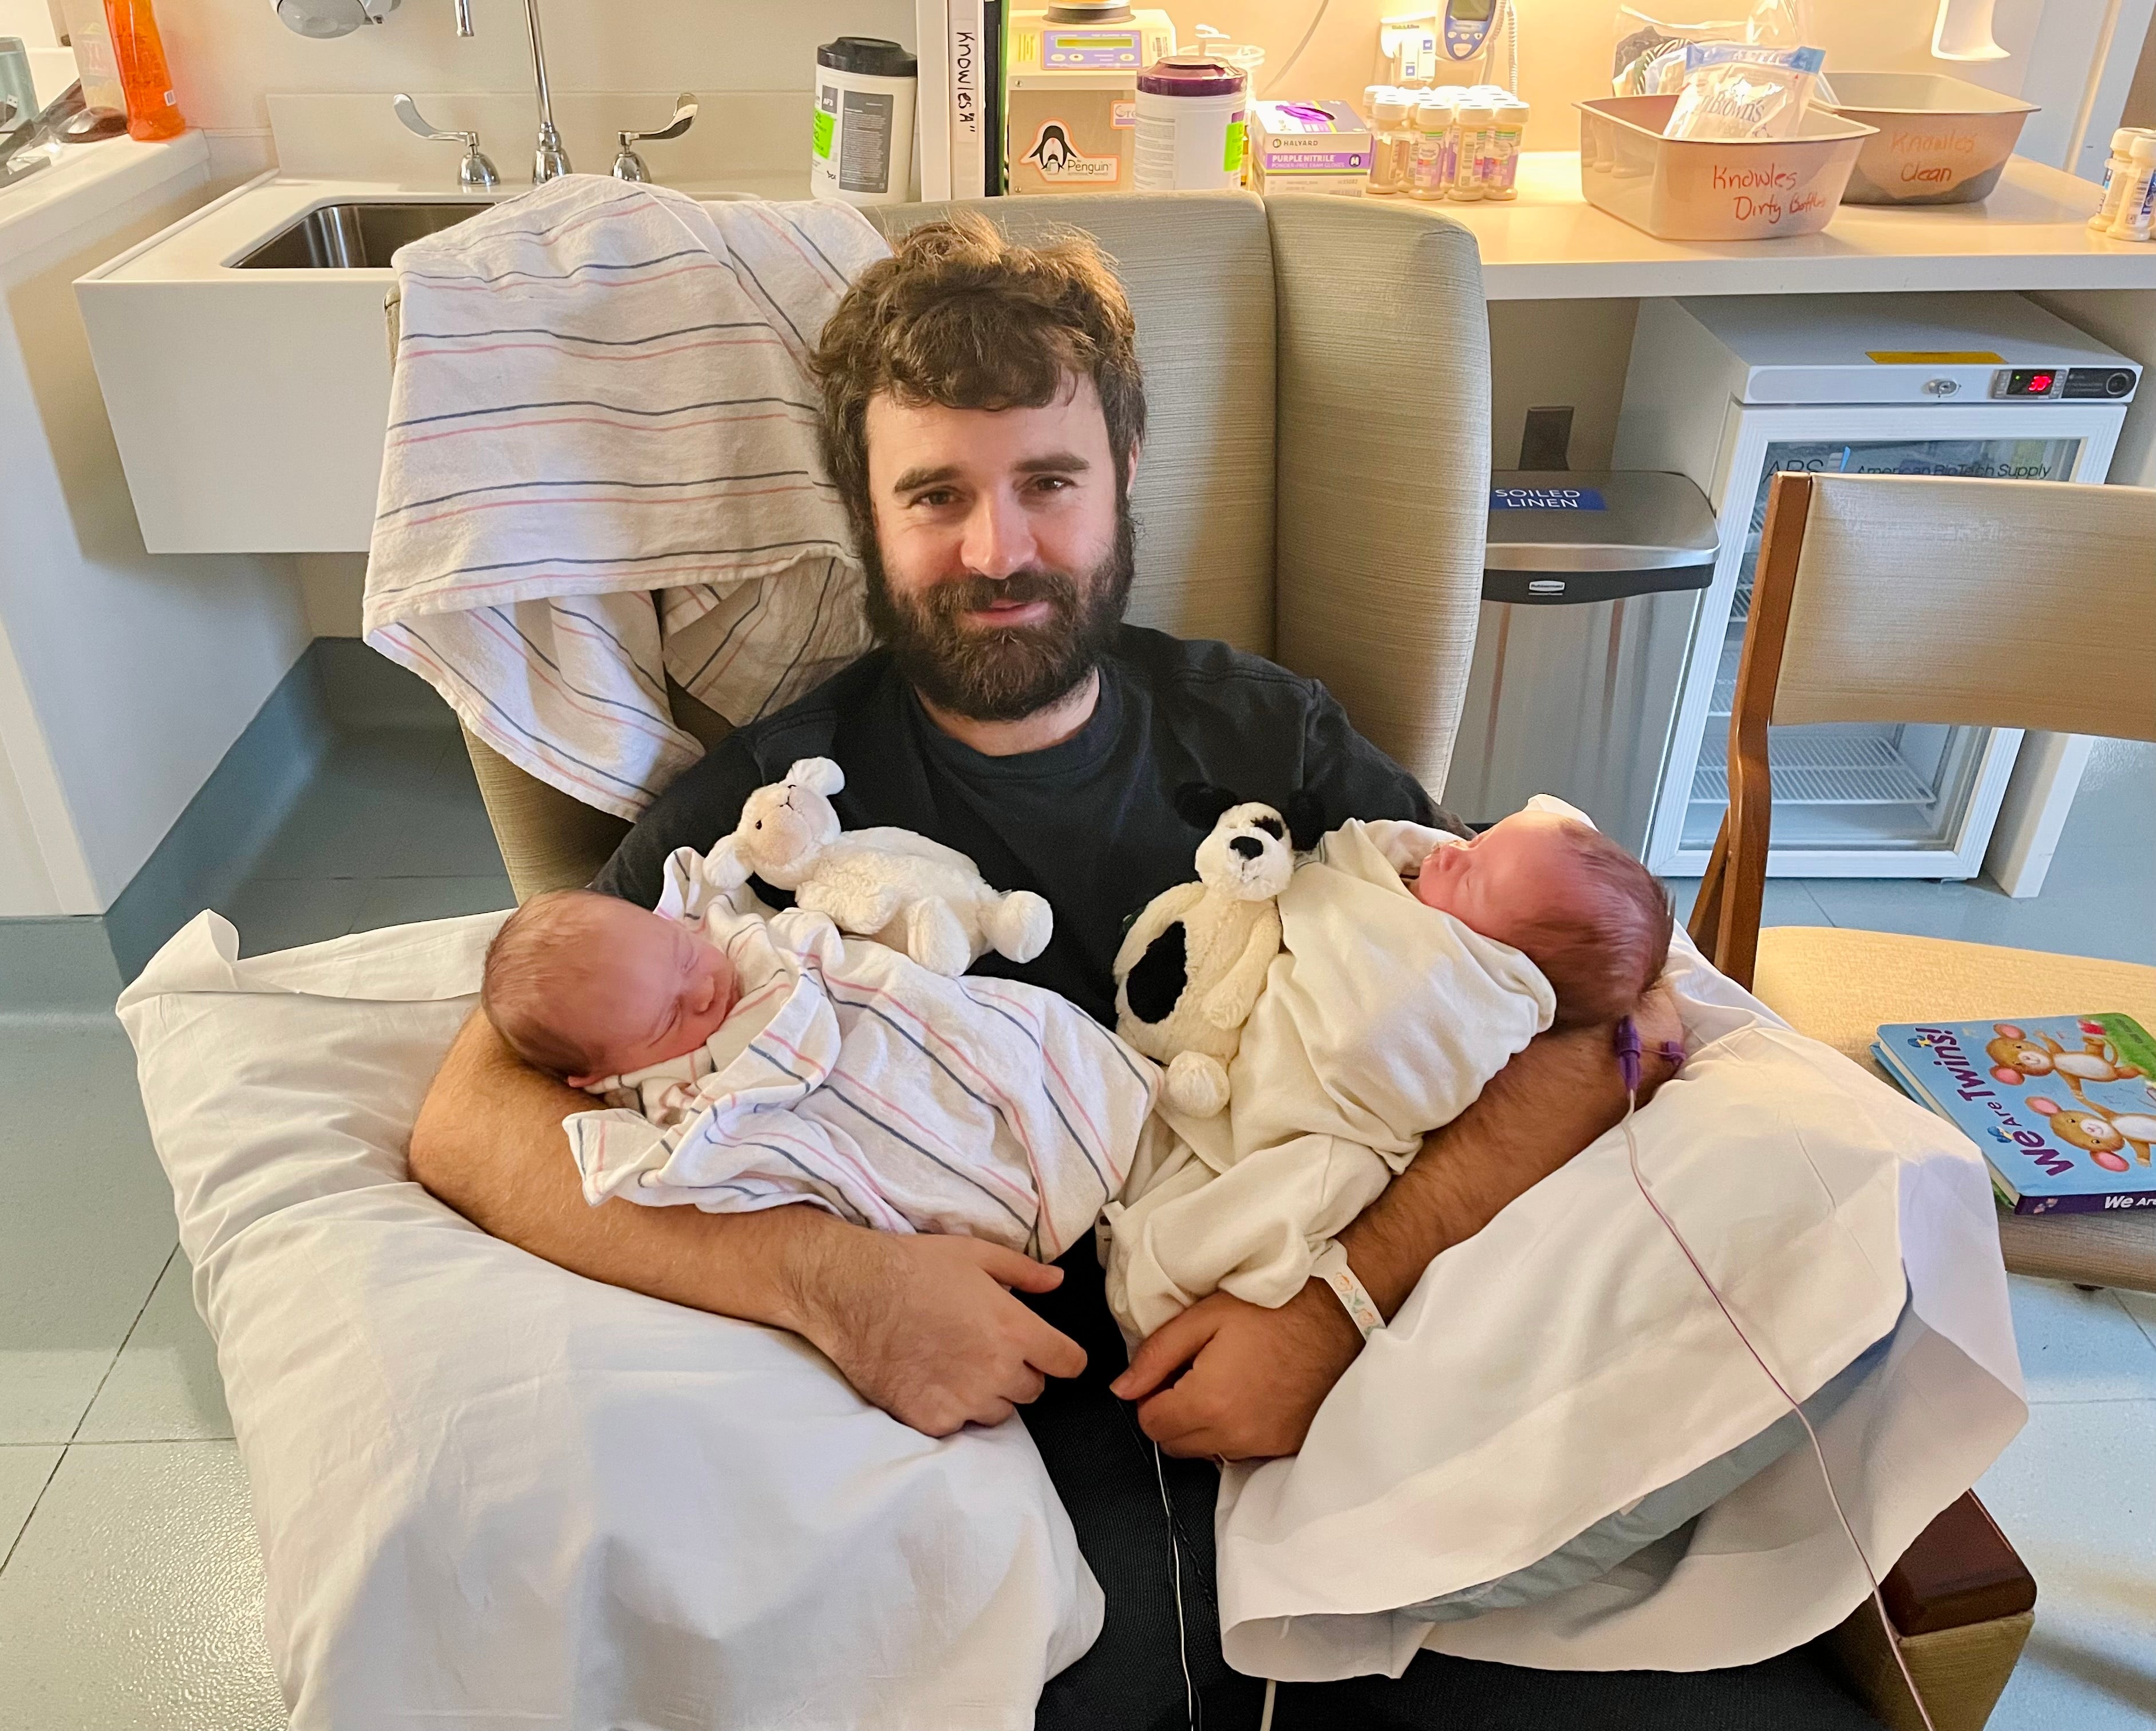 Sameul Mathias holding his newborn twins.